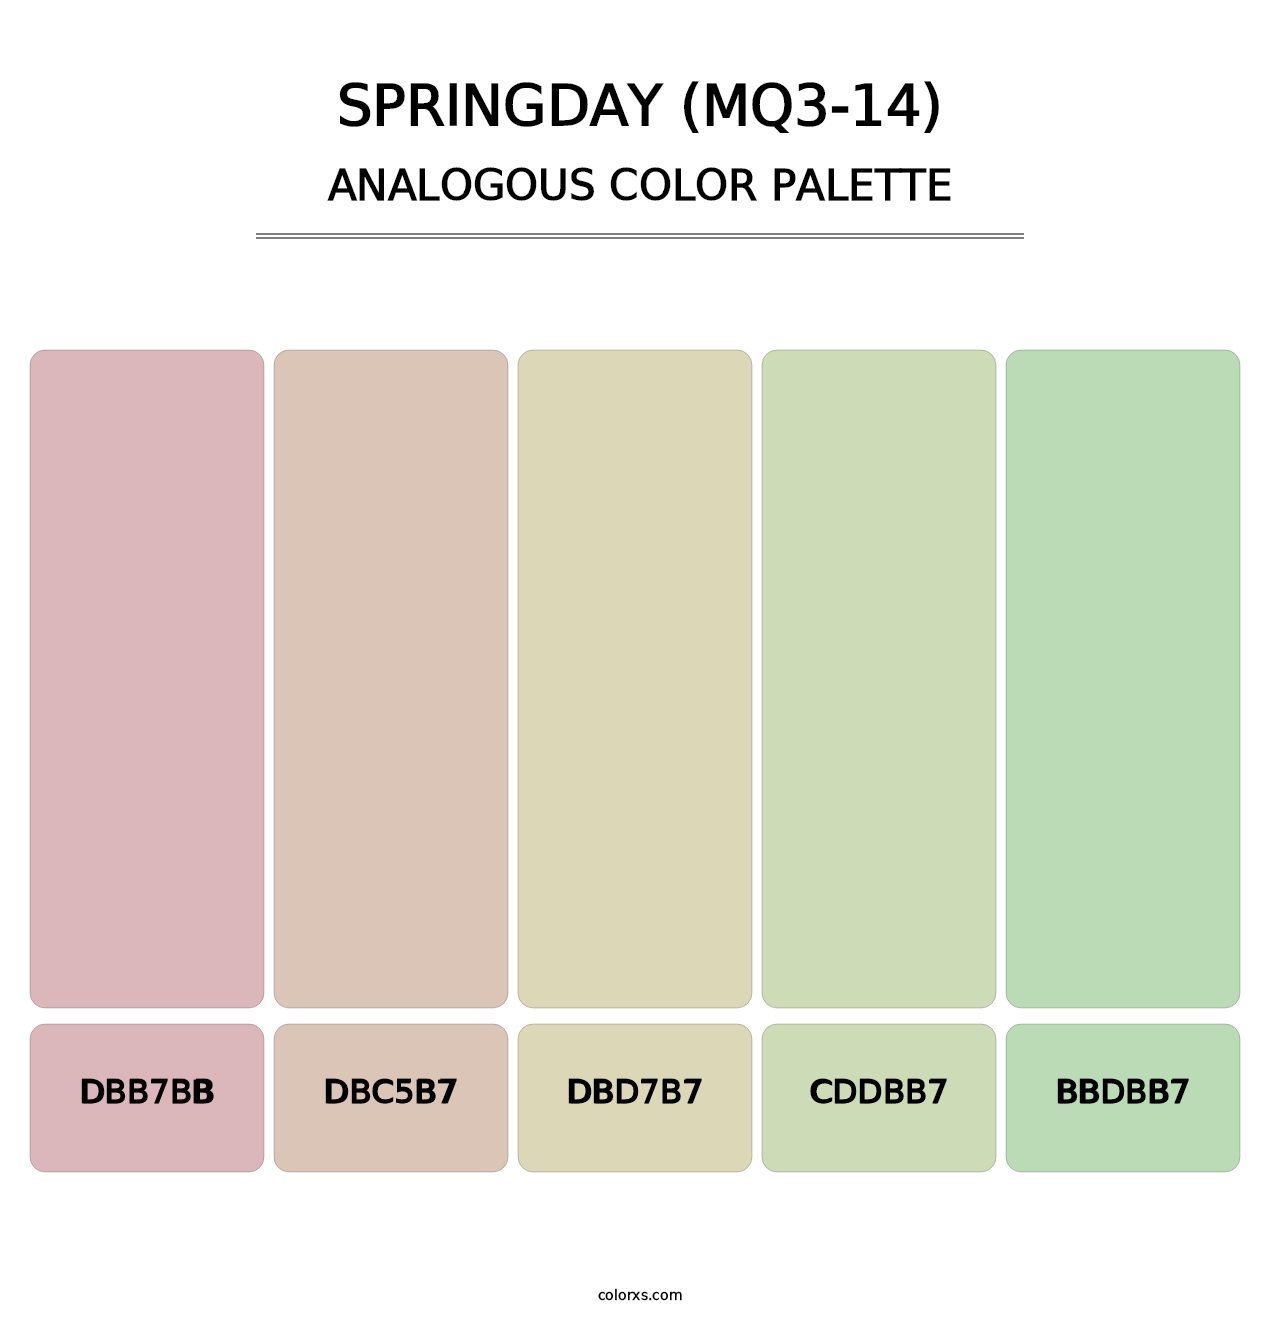 Springday (MQ3-14) - Analogous Color Palette